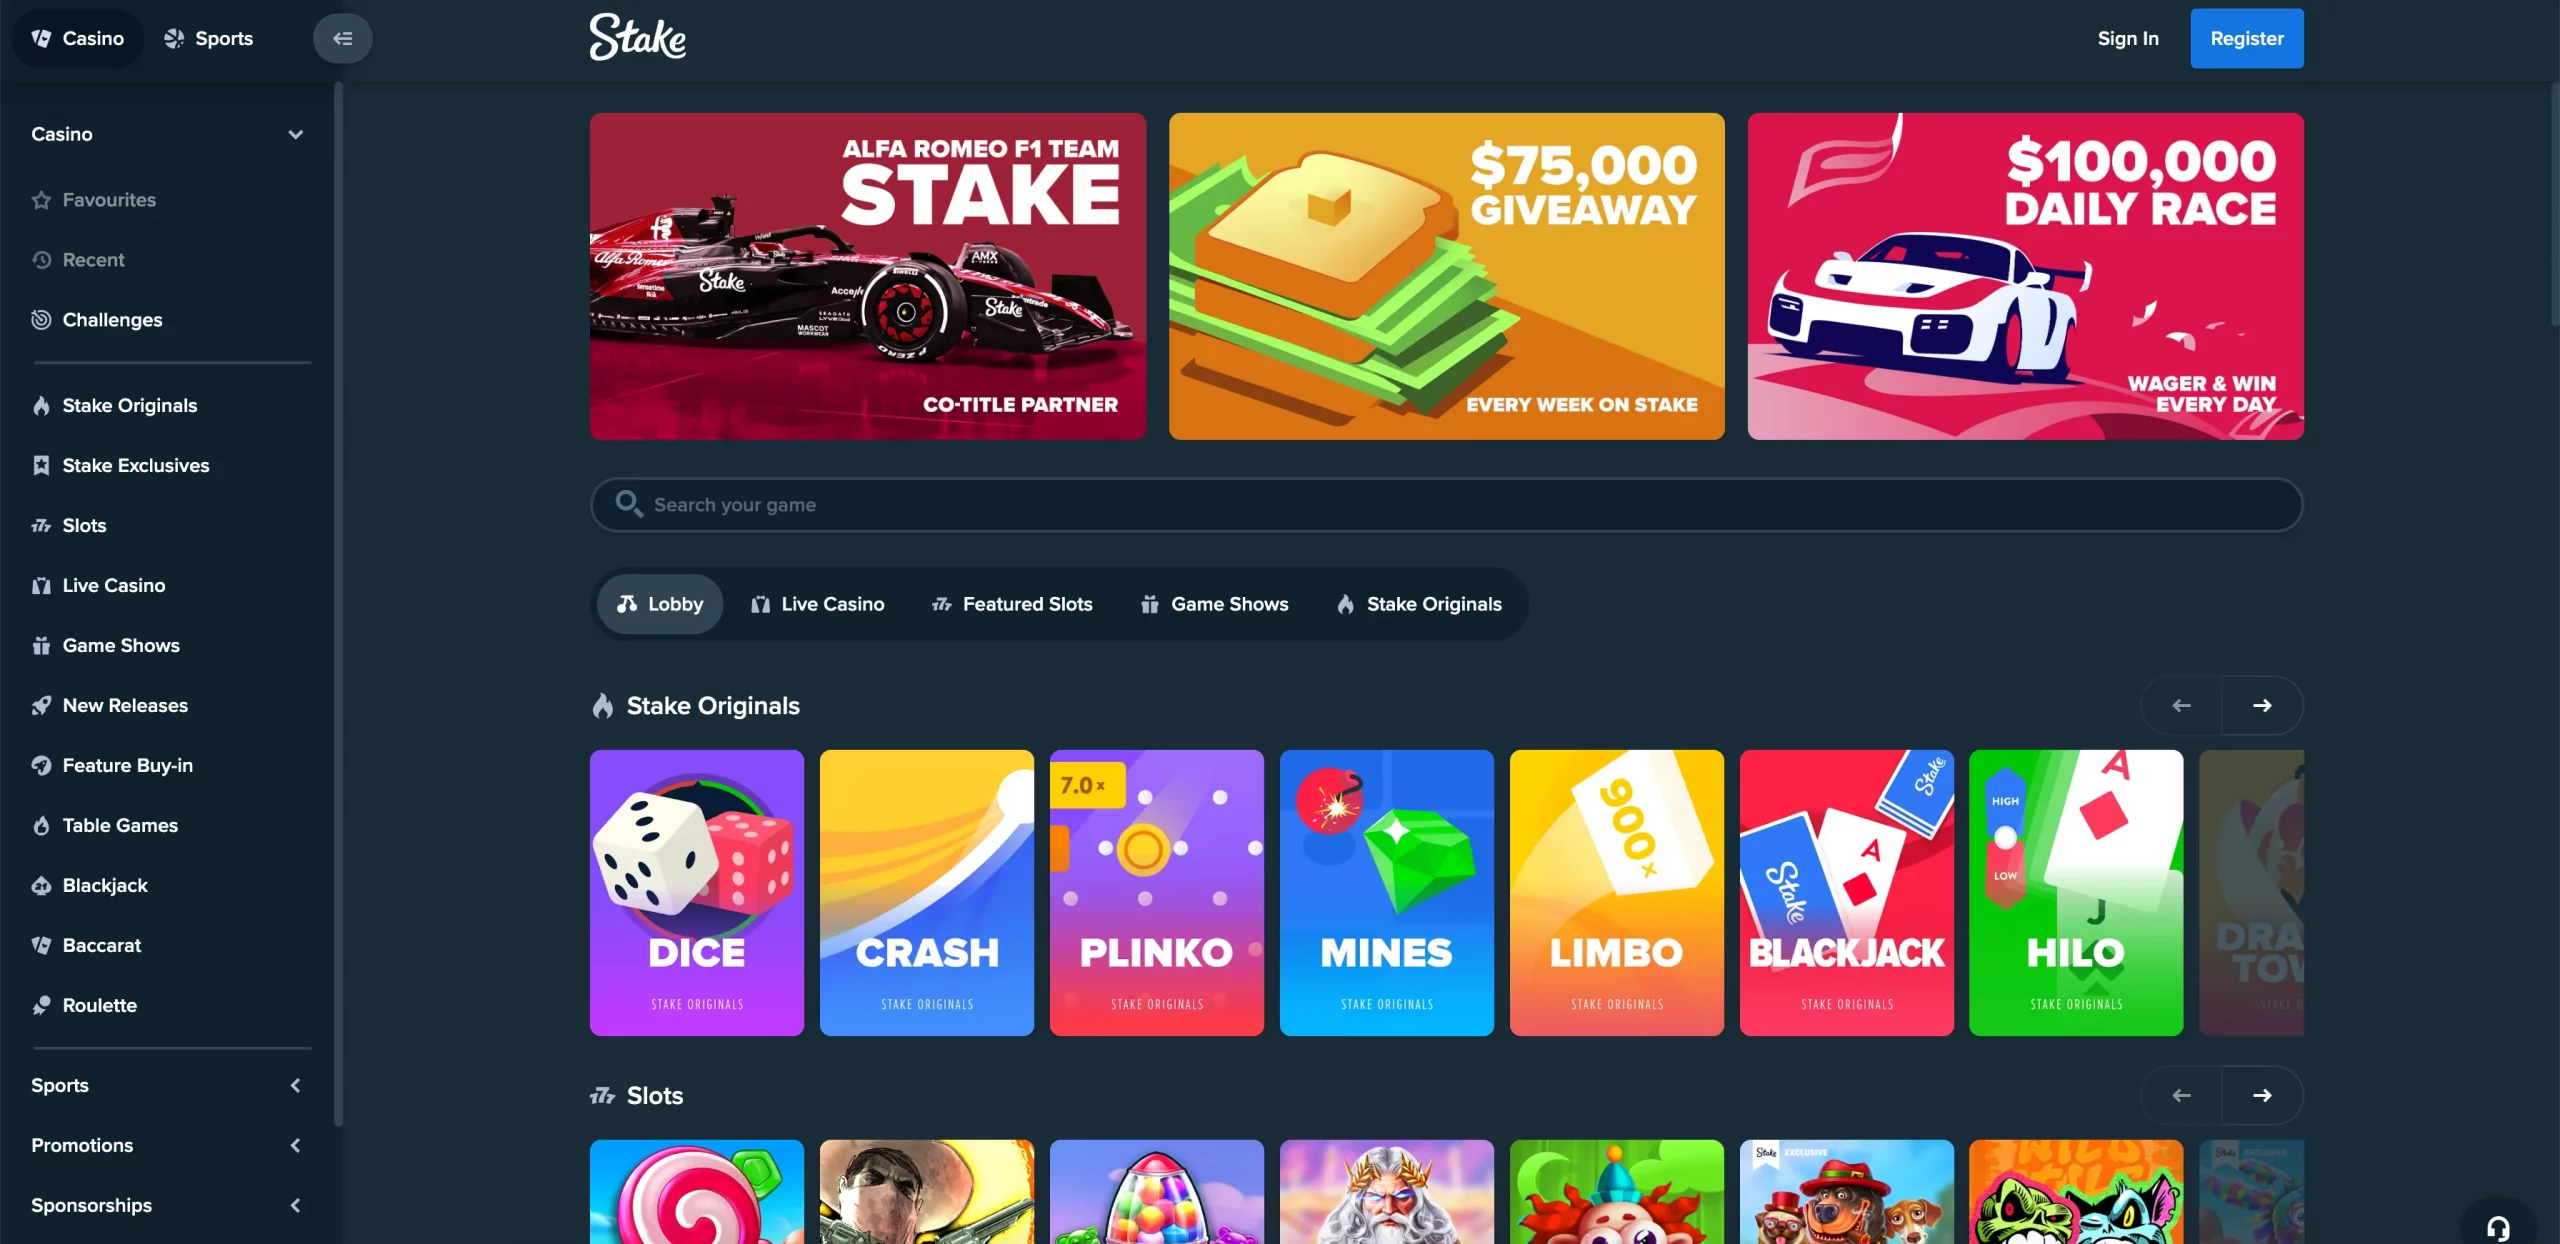 Stake Casino in Singapore games